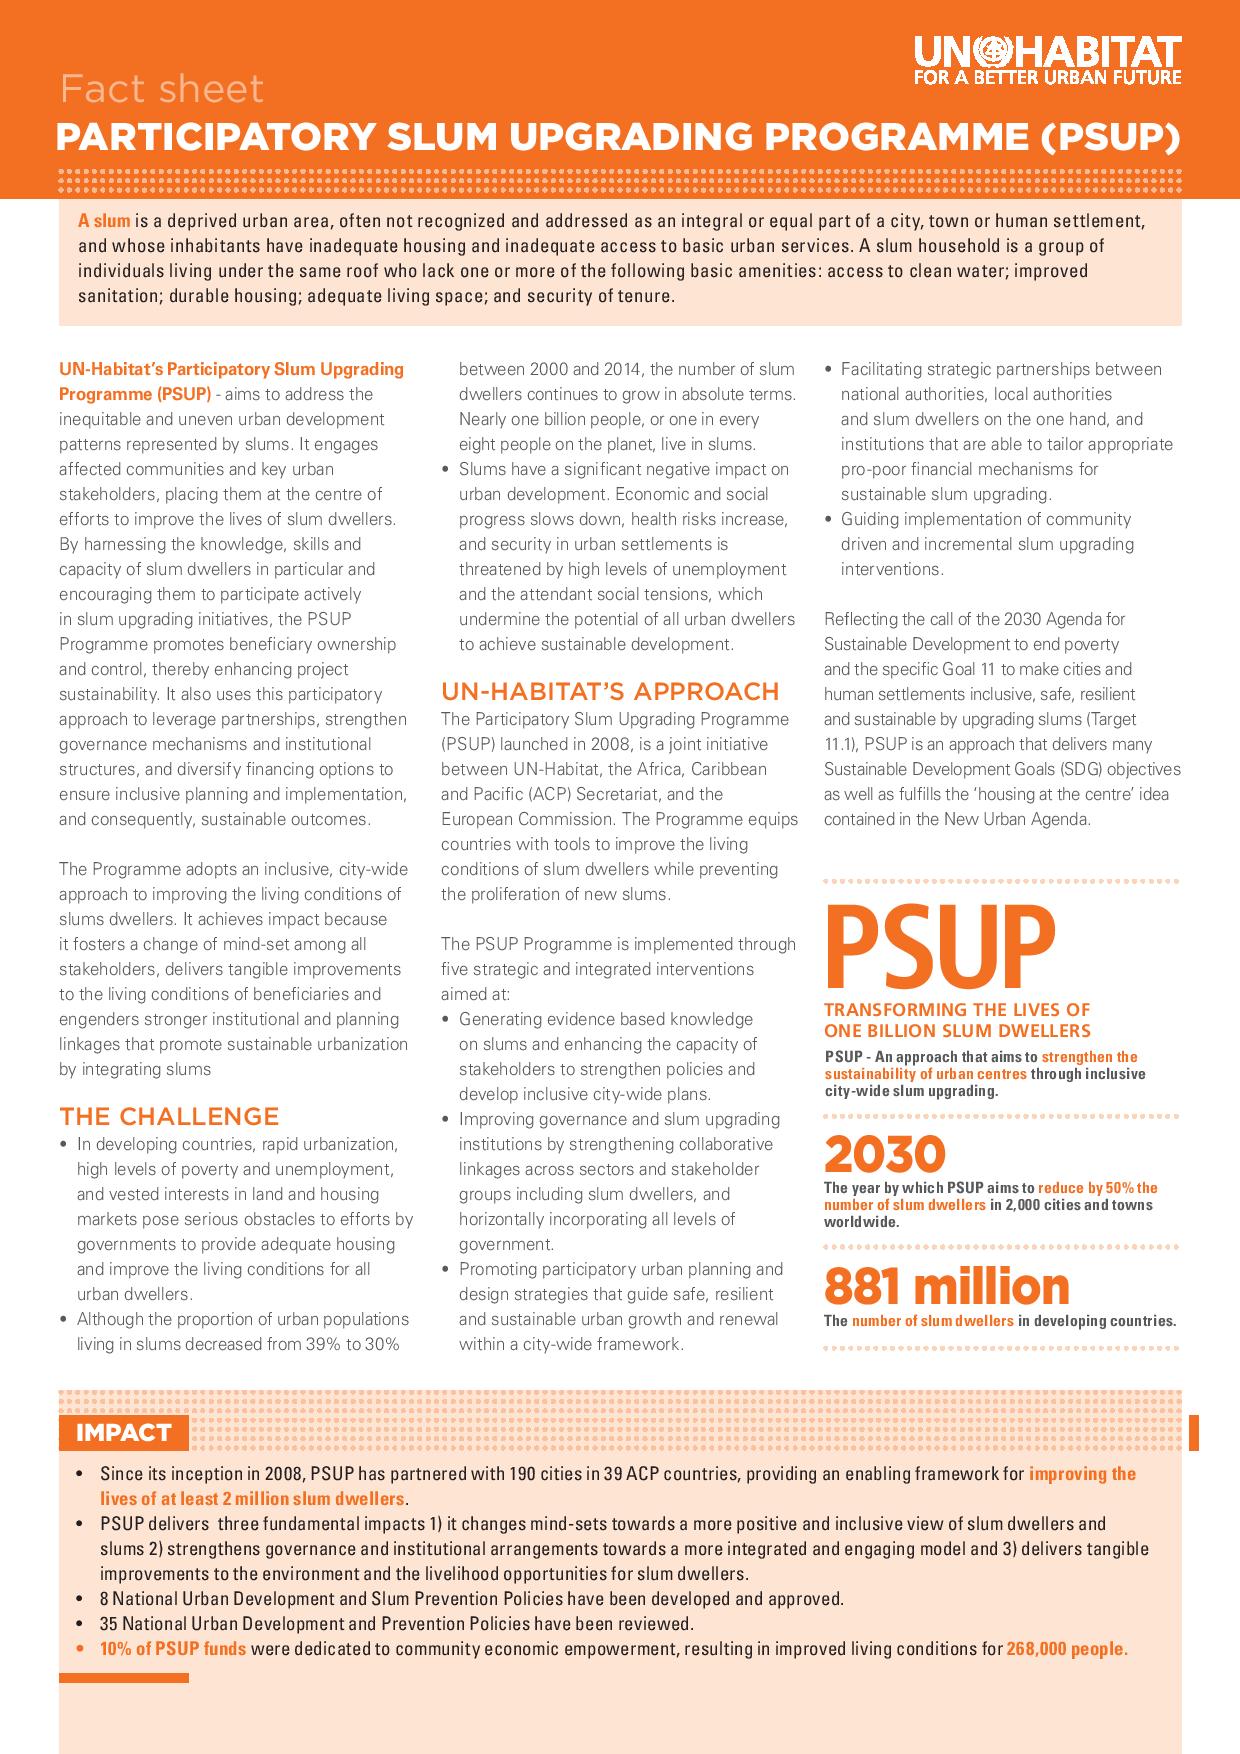 Fact Sheet: Participatory Slum Upgrading Programme (PSUP)